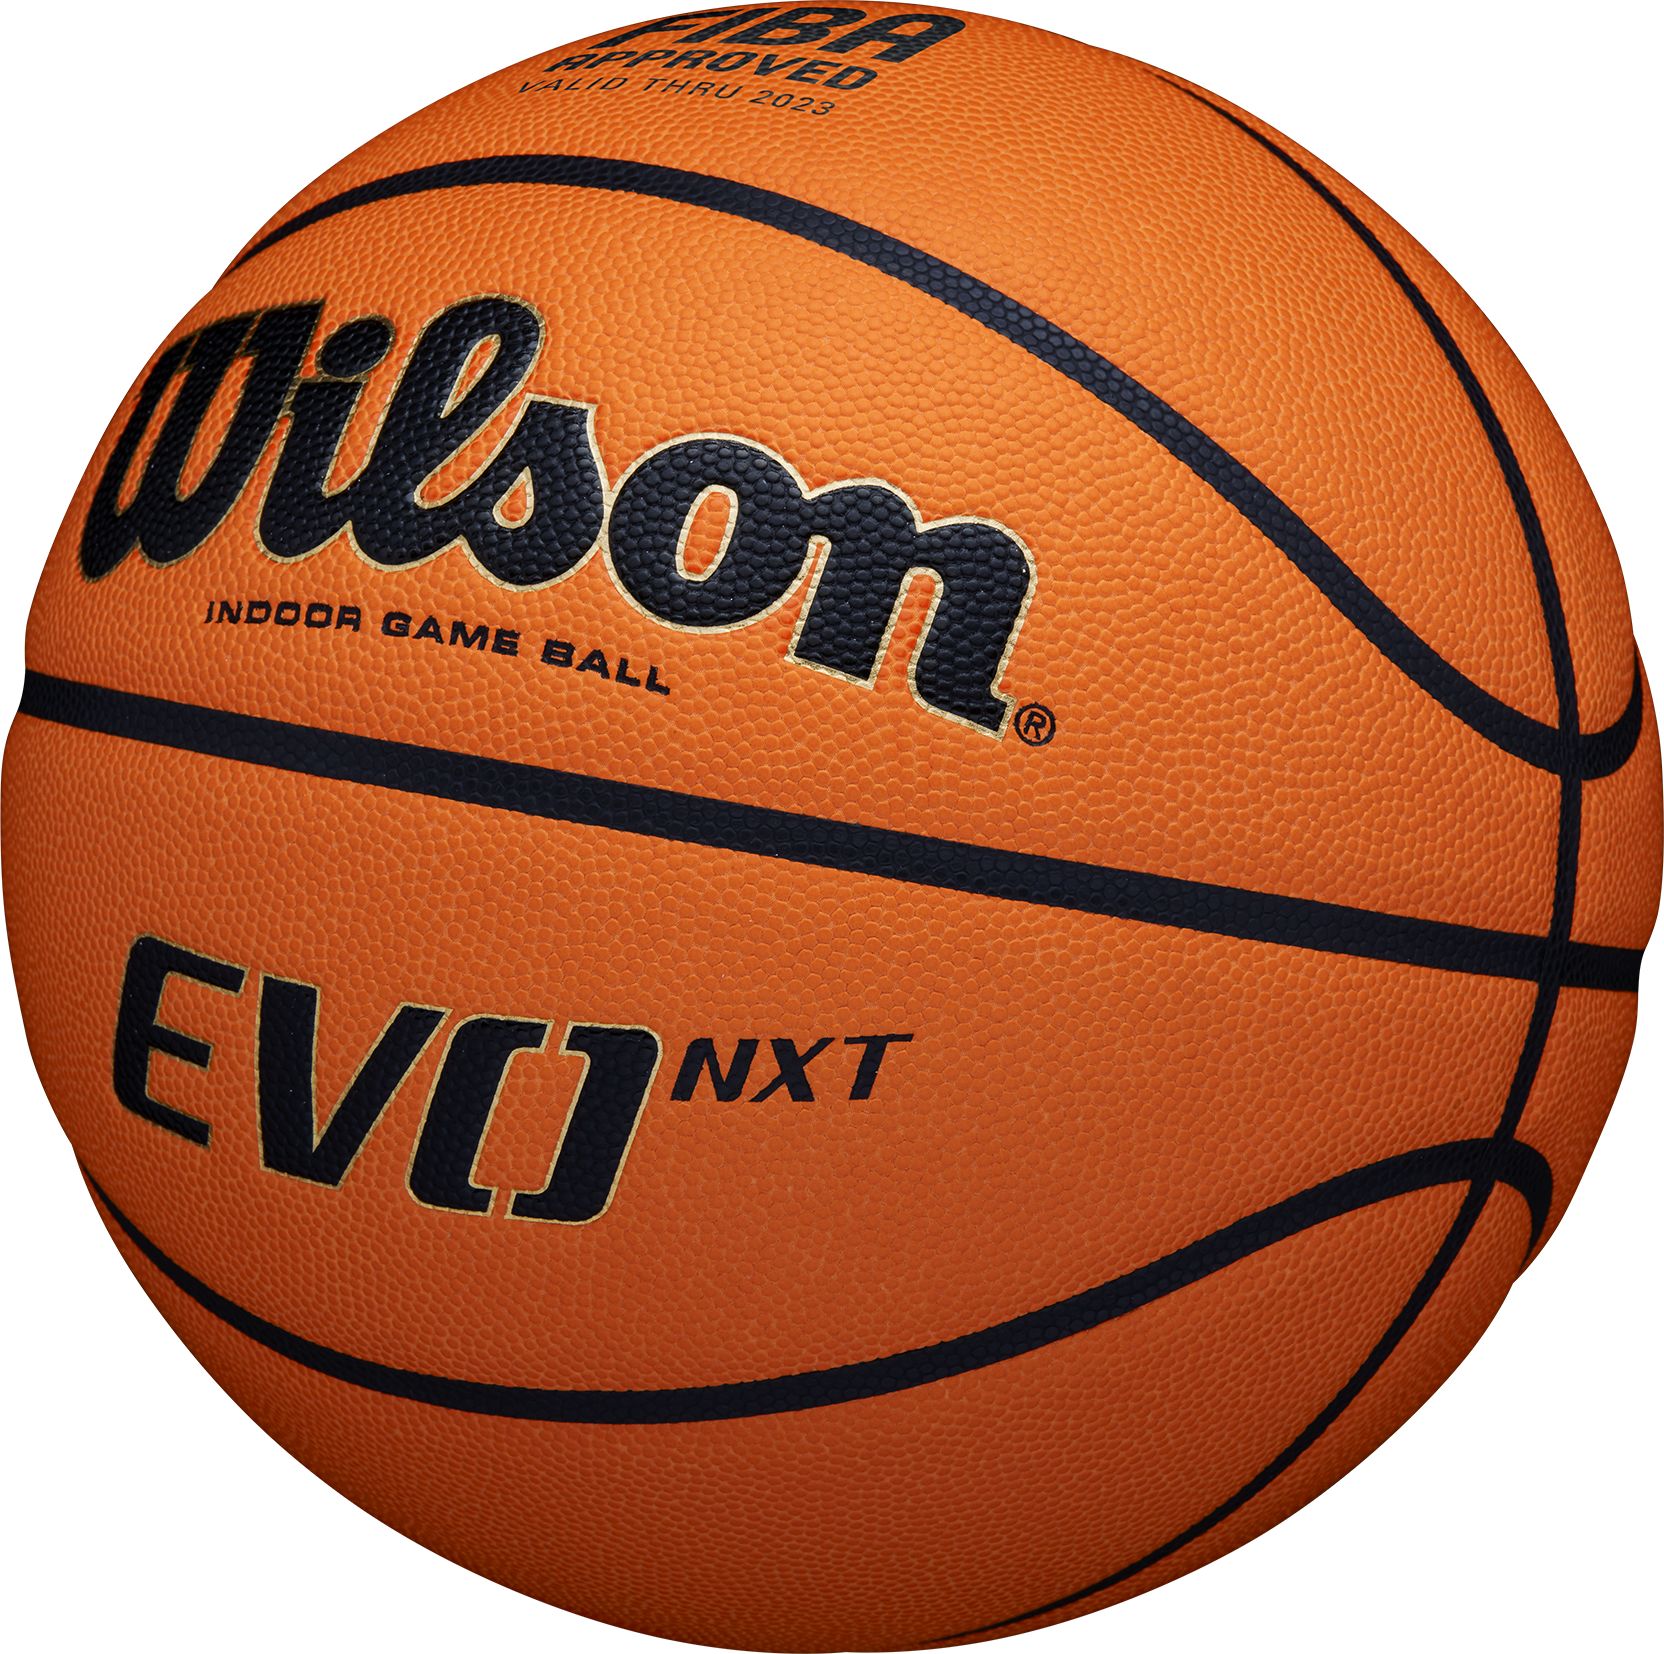 WILSON, EVO NXT FIBA GAME BALL 7